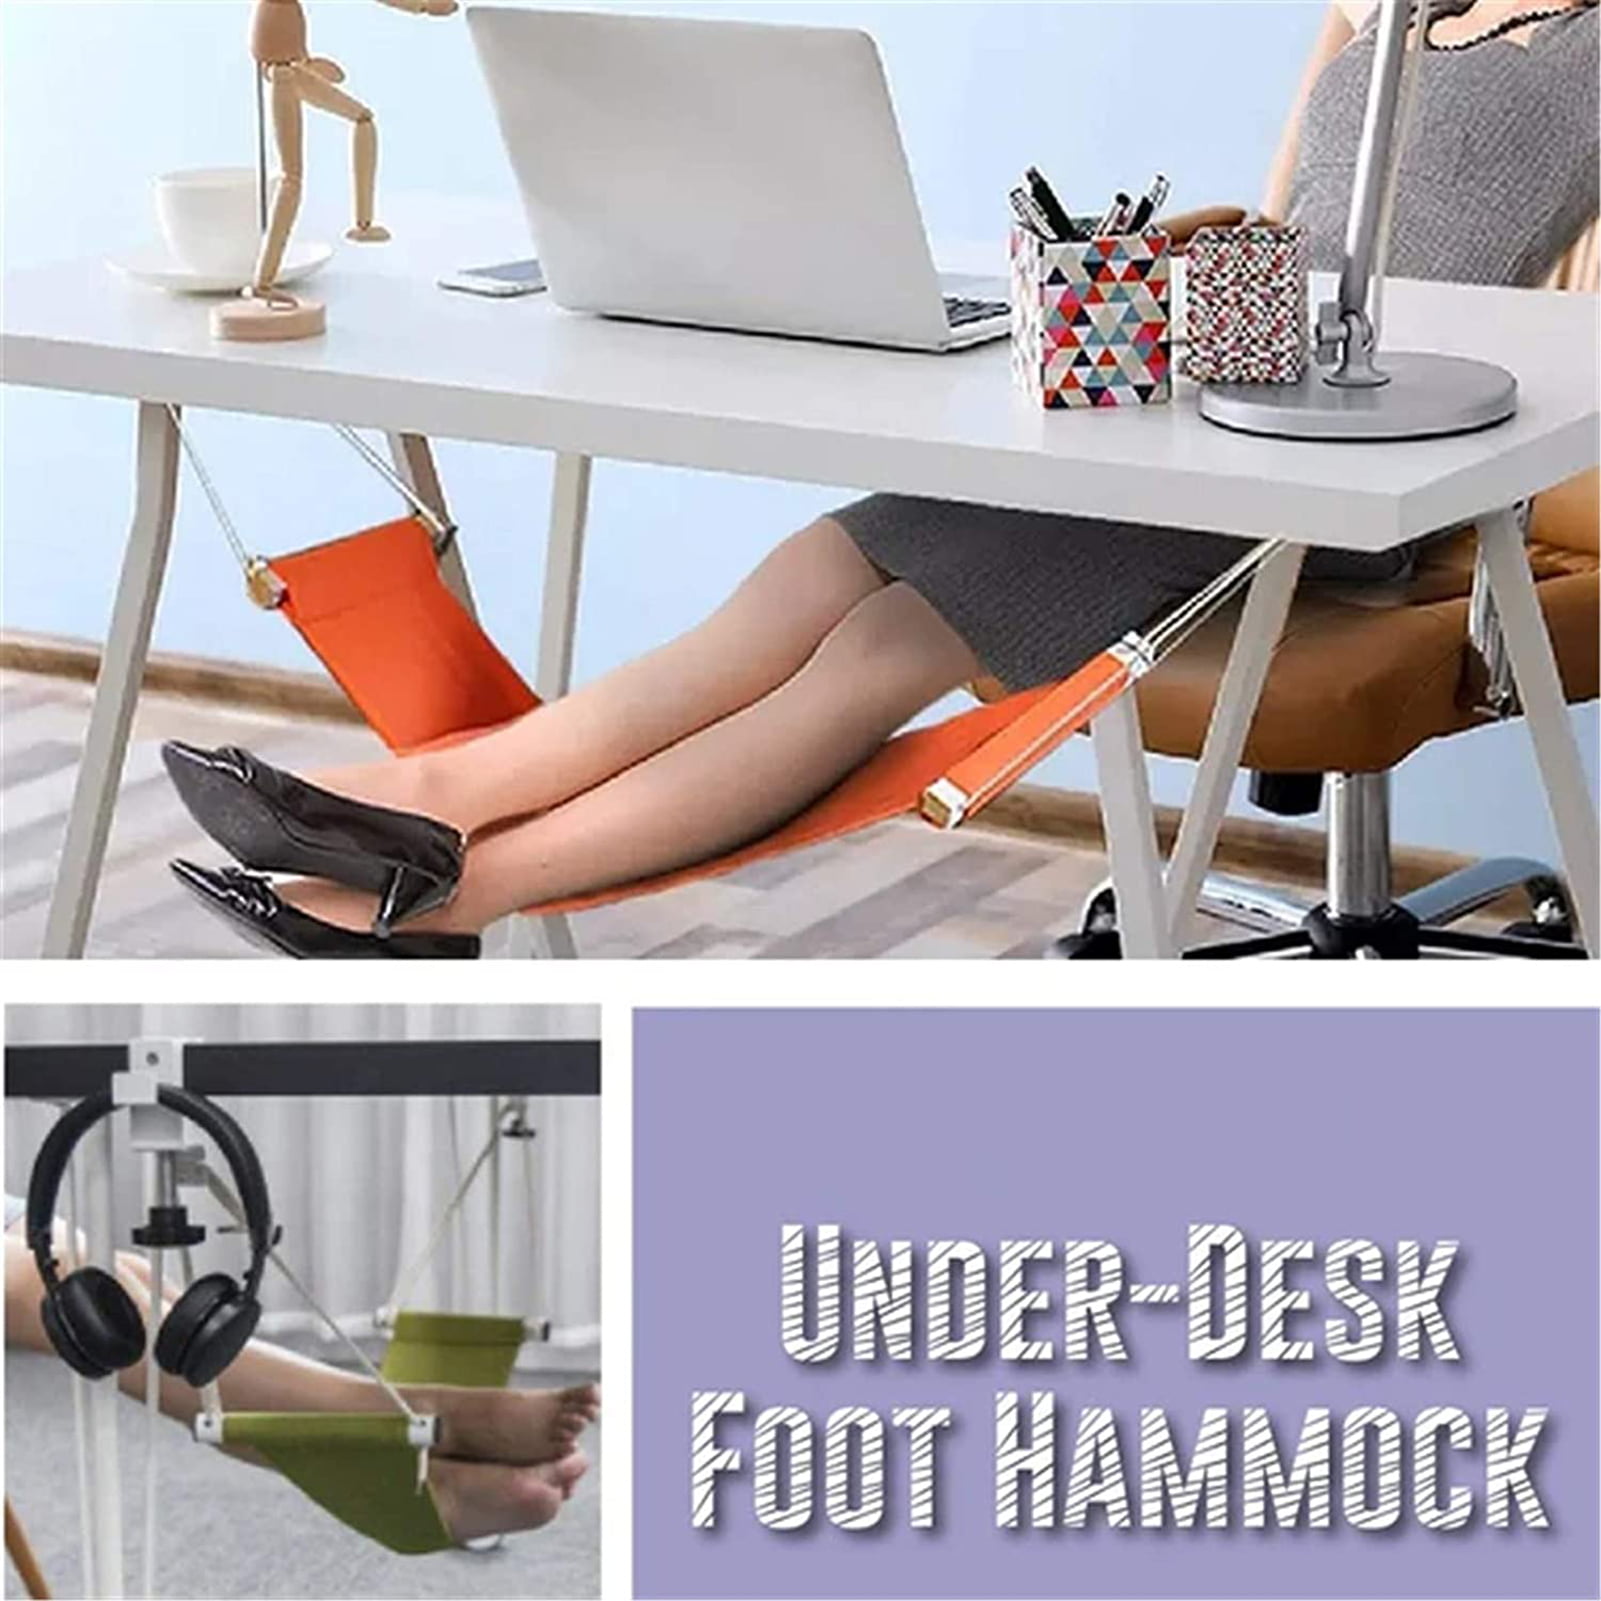 Desk Foot Hammock under Table Put Feet Foot Swing Footrest Relax